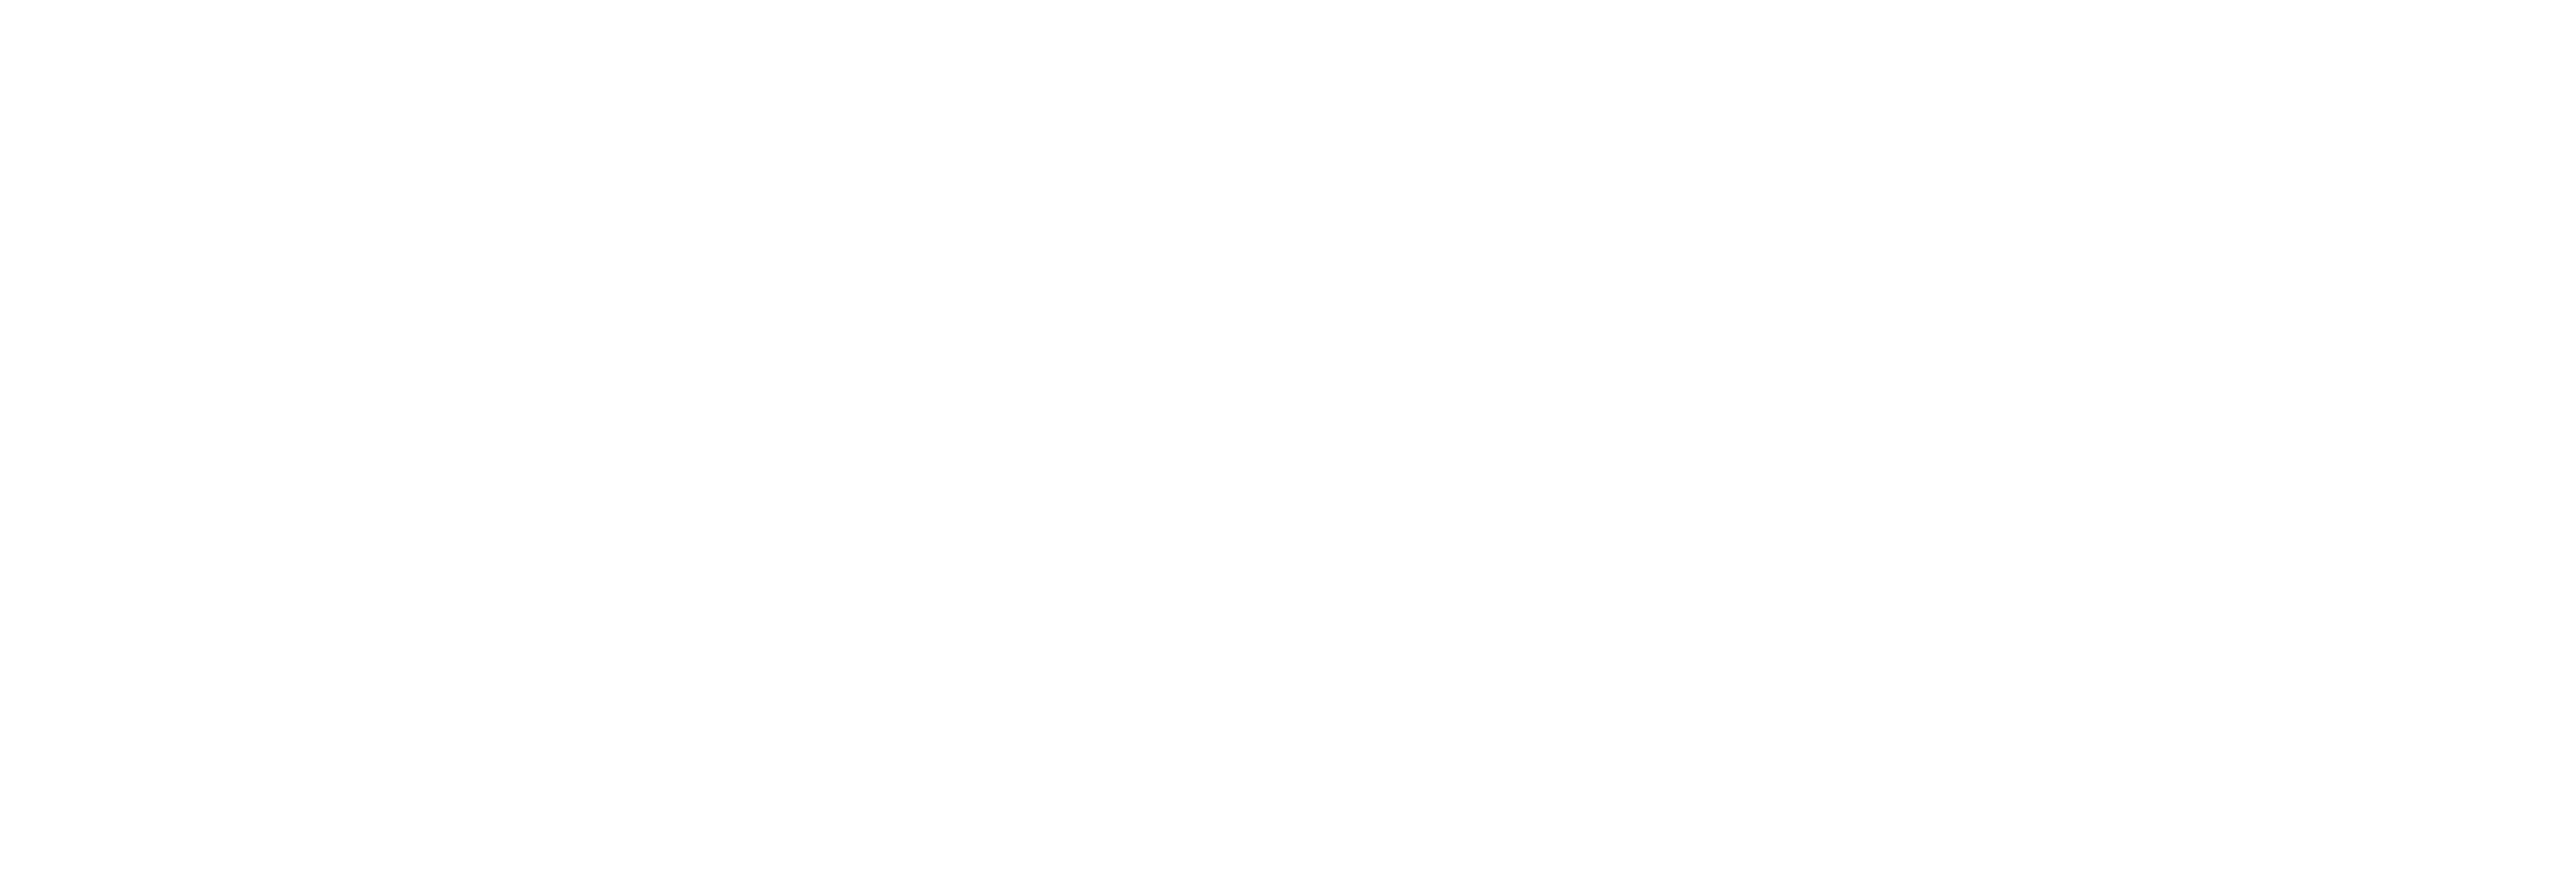 Tarsus Logo